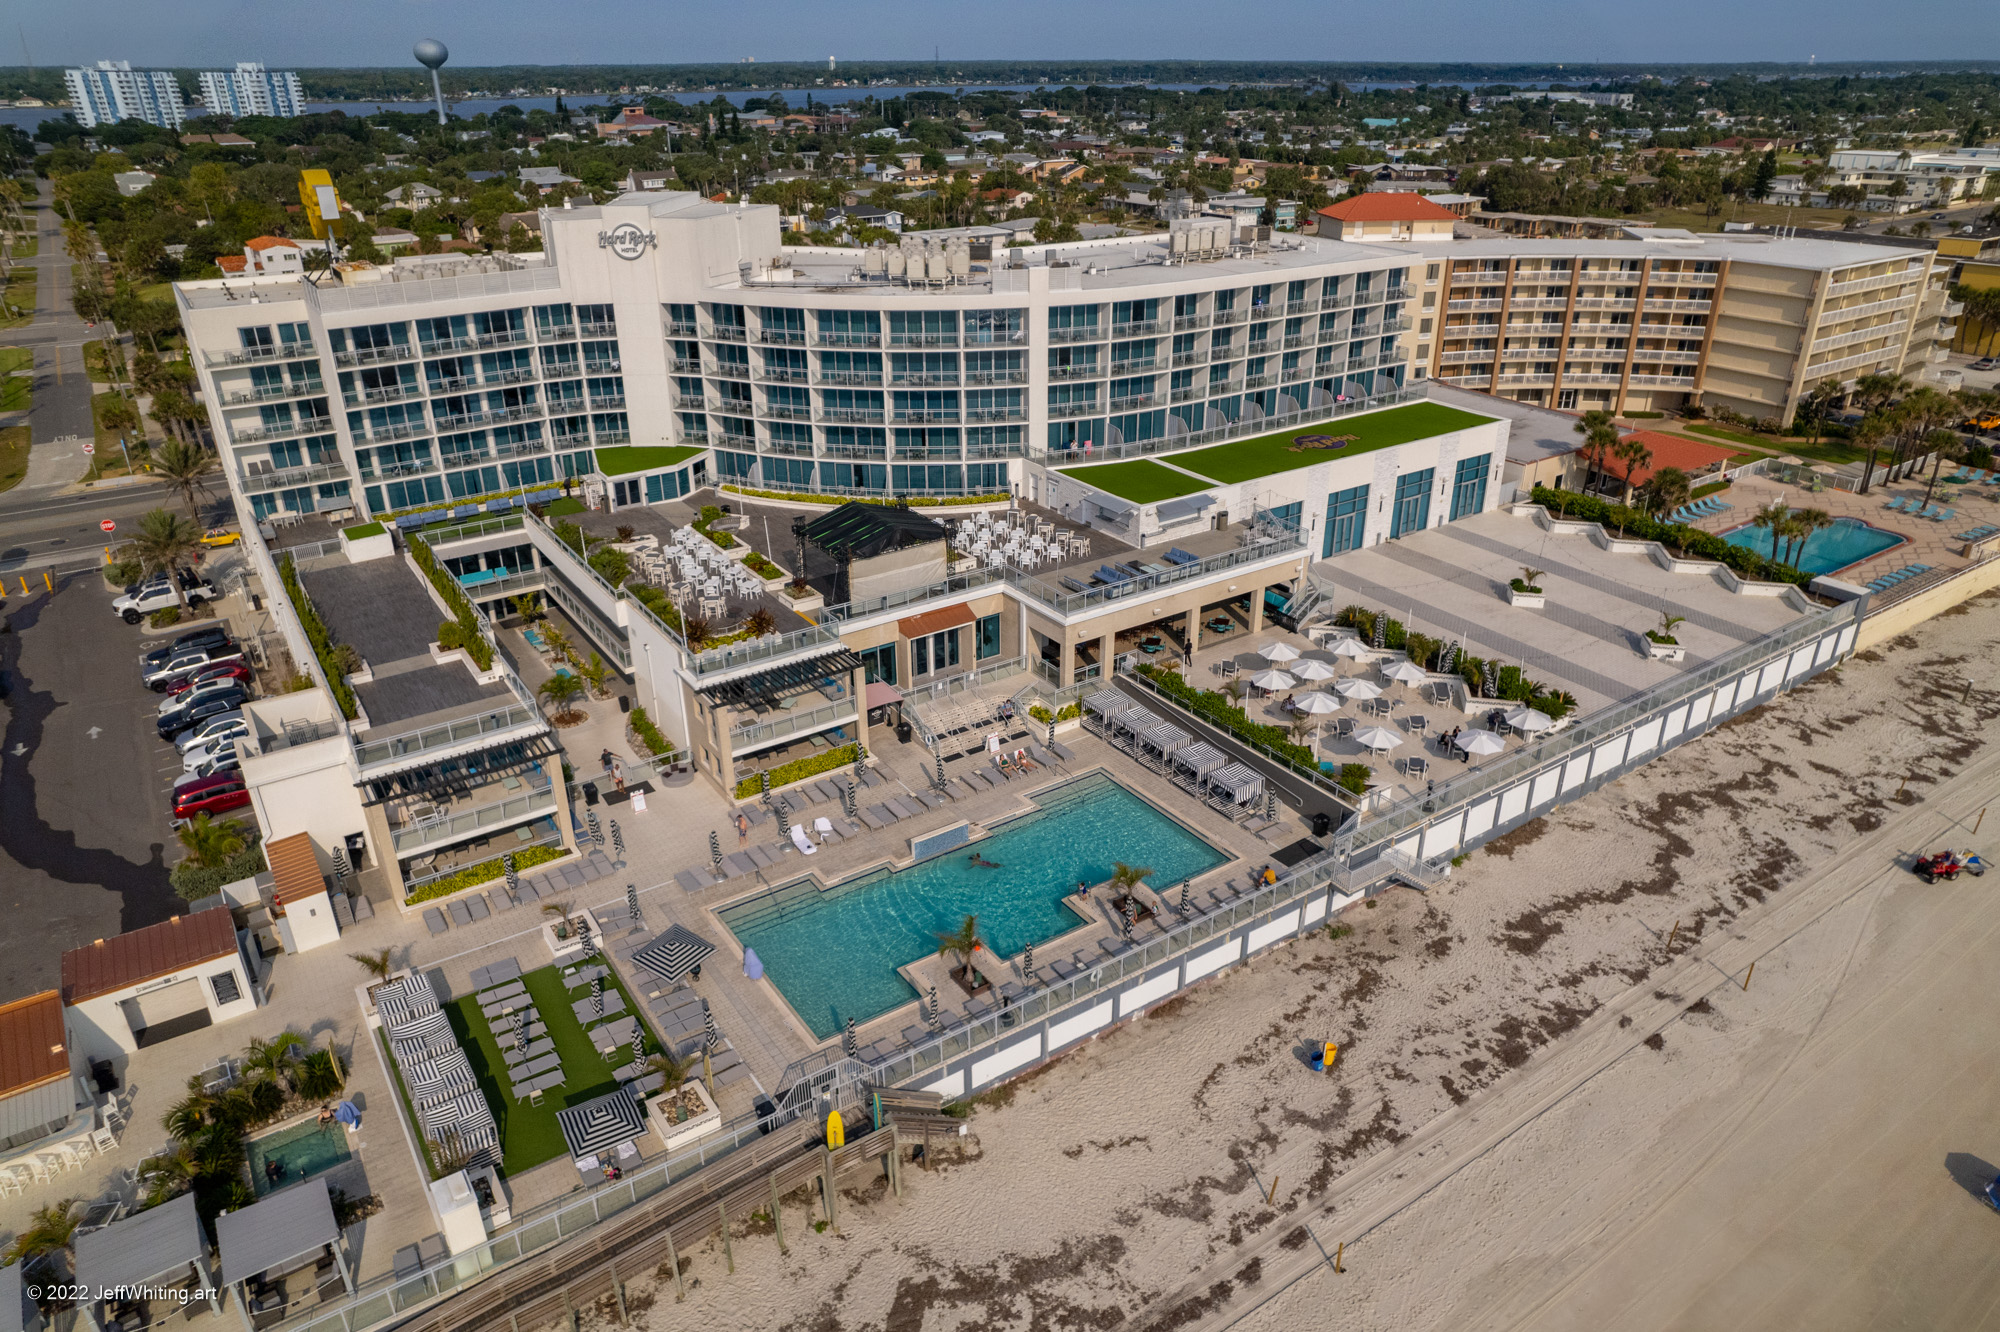 Hard Rock Hotel Daytona Beach Drones Over Daytona